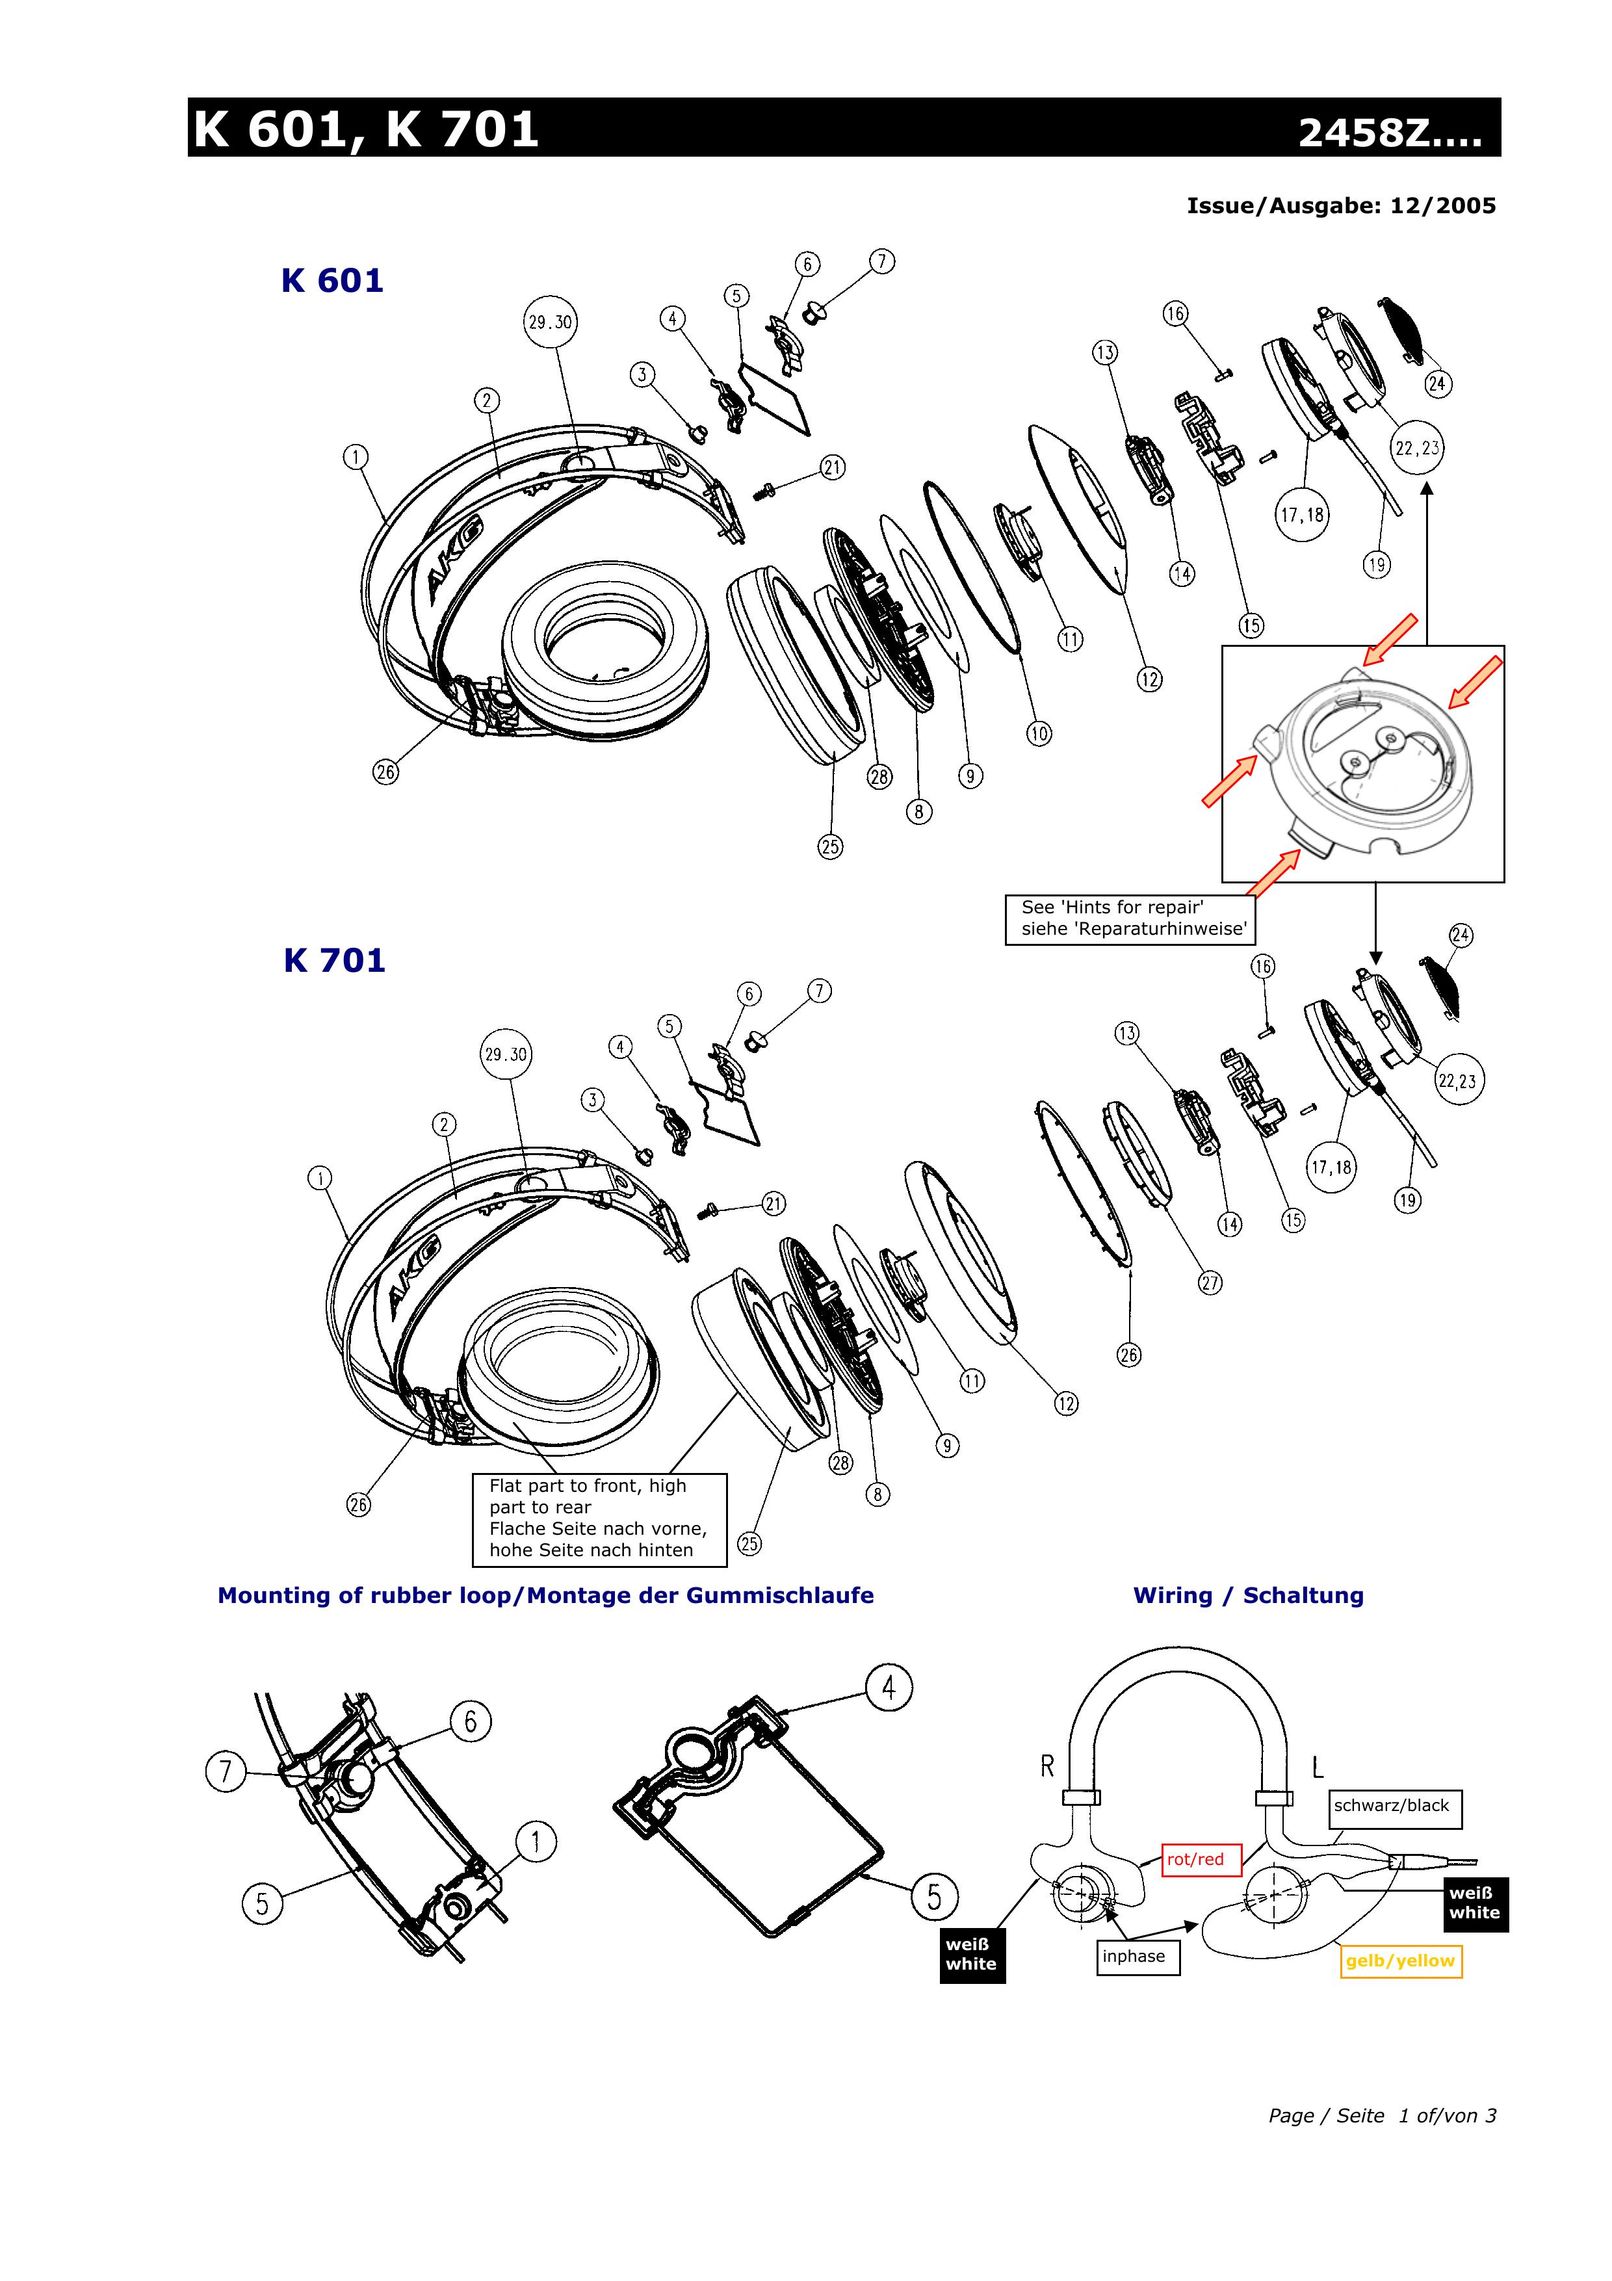 AKG Acoustics K 701 Headphones User Manual